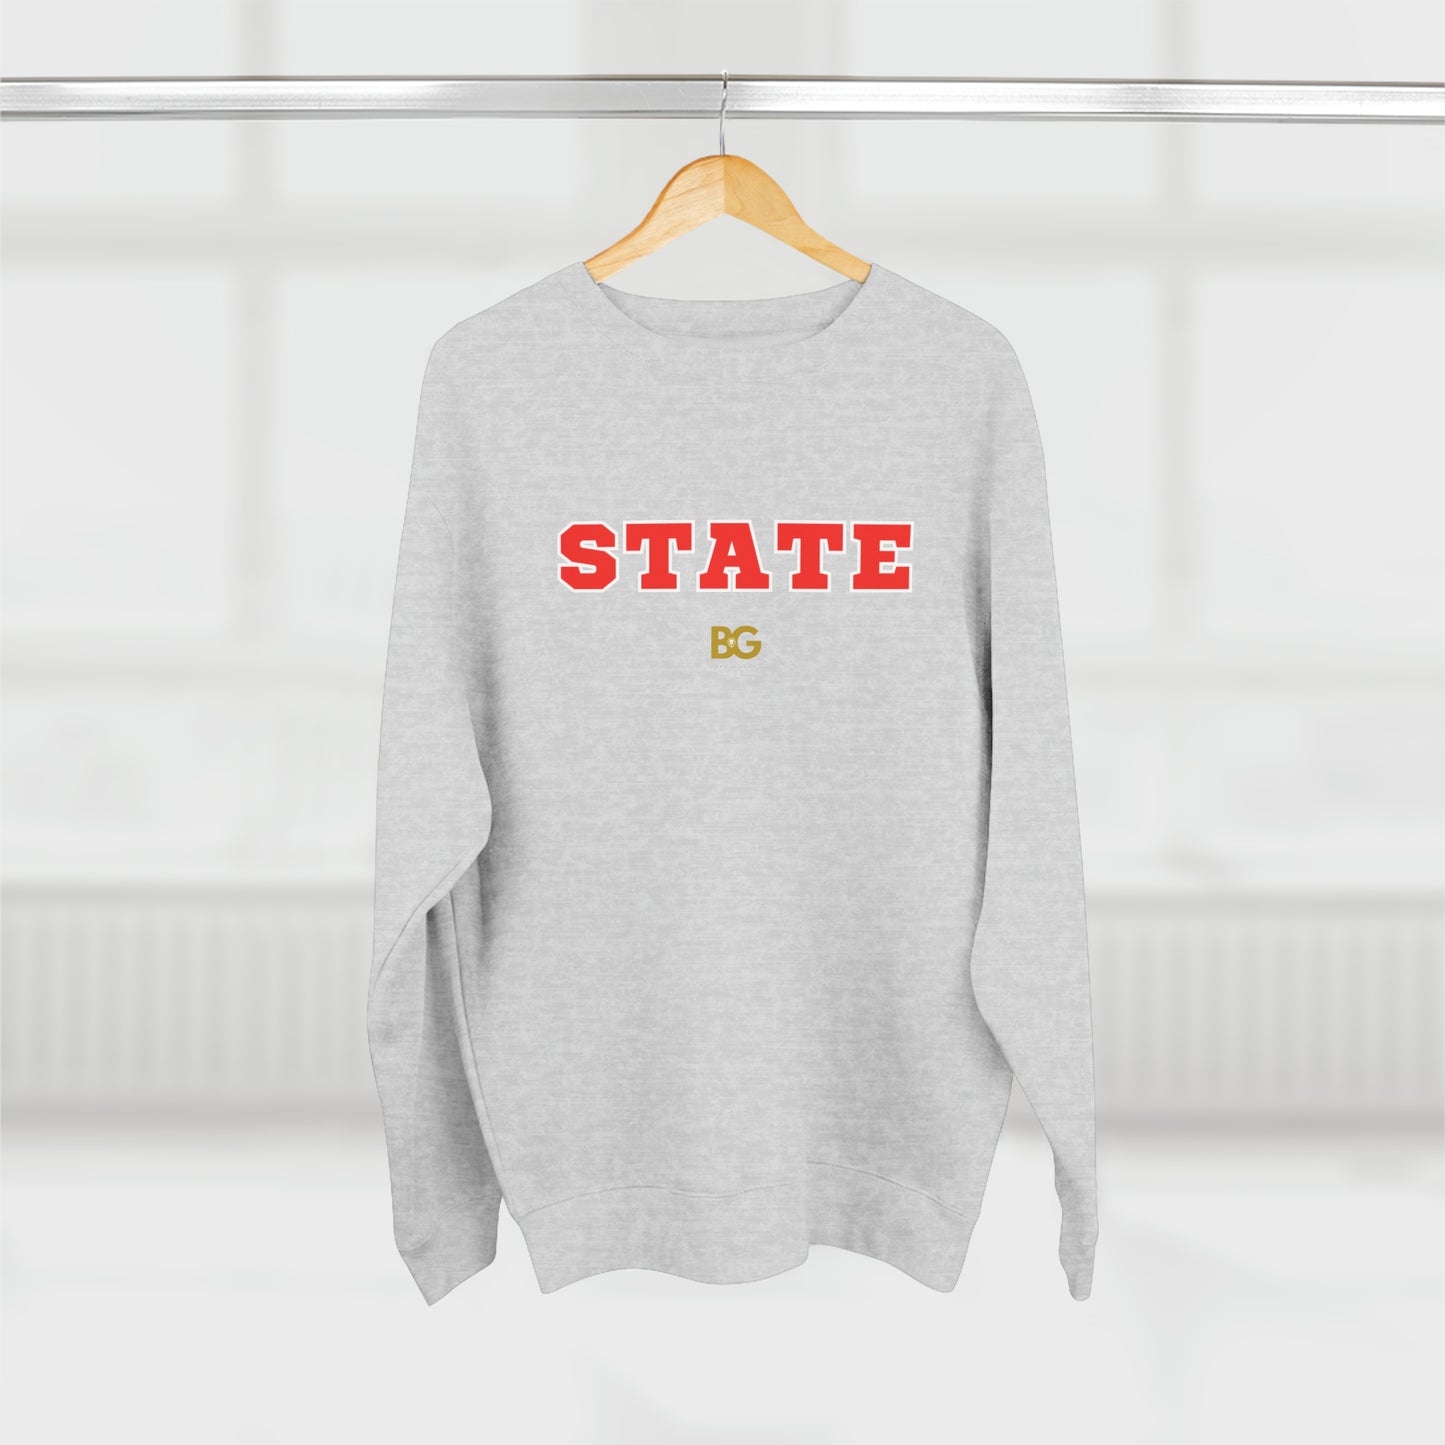 BG "State" Premium Crewneck Sweatshirt